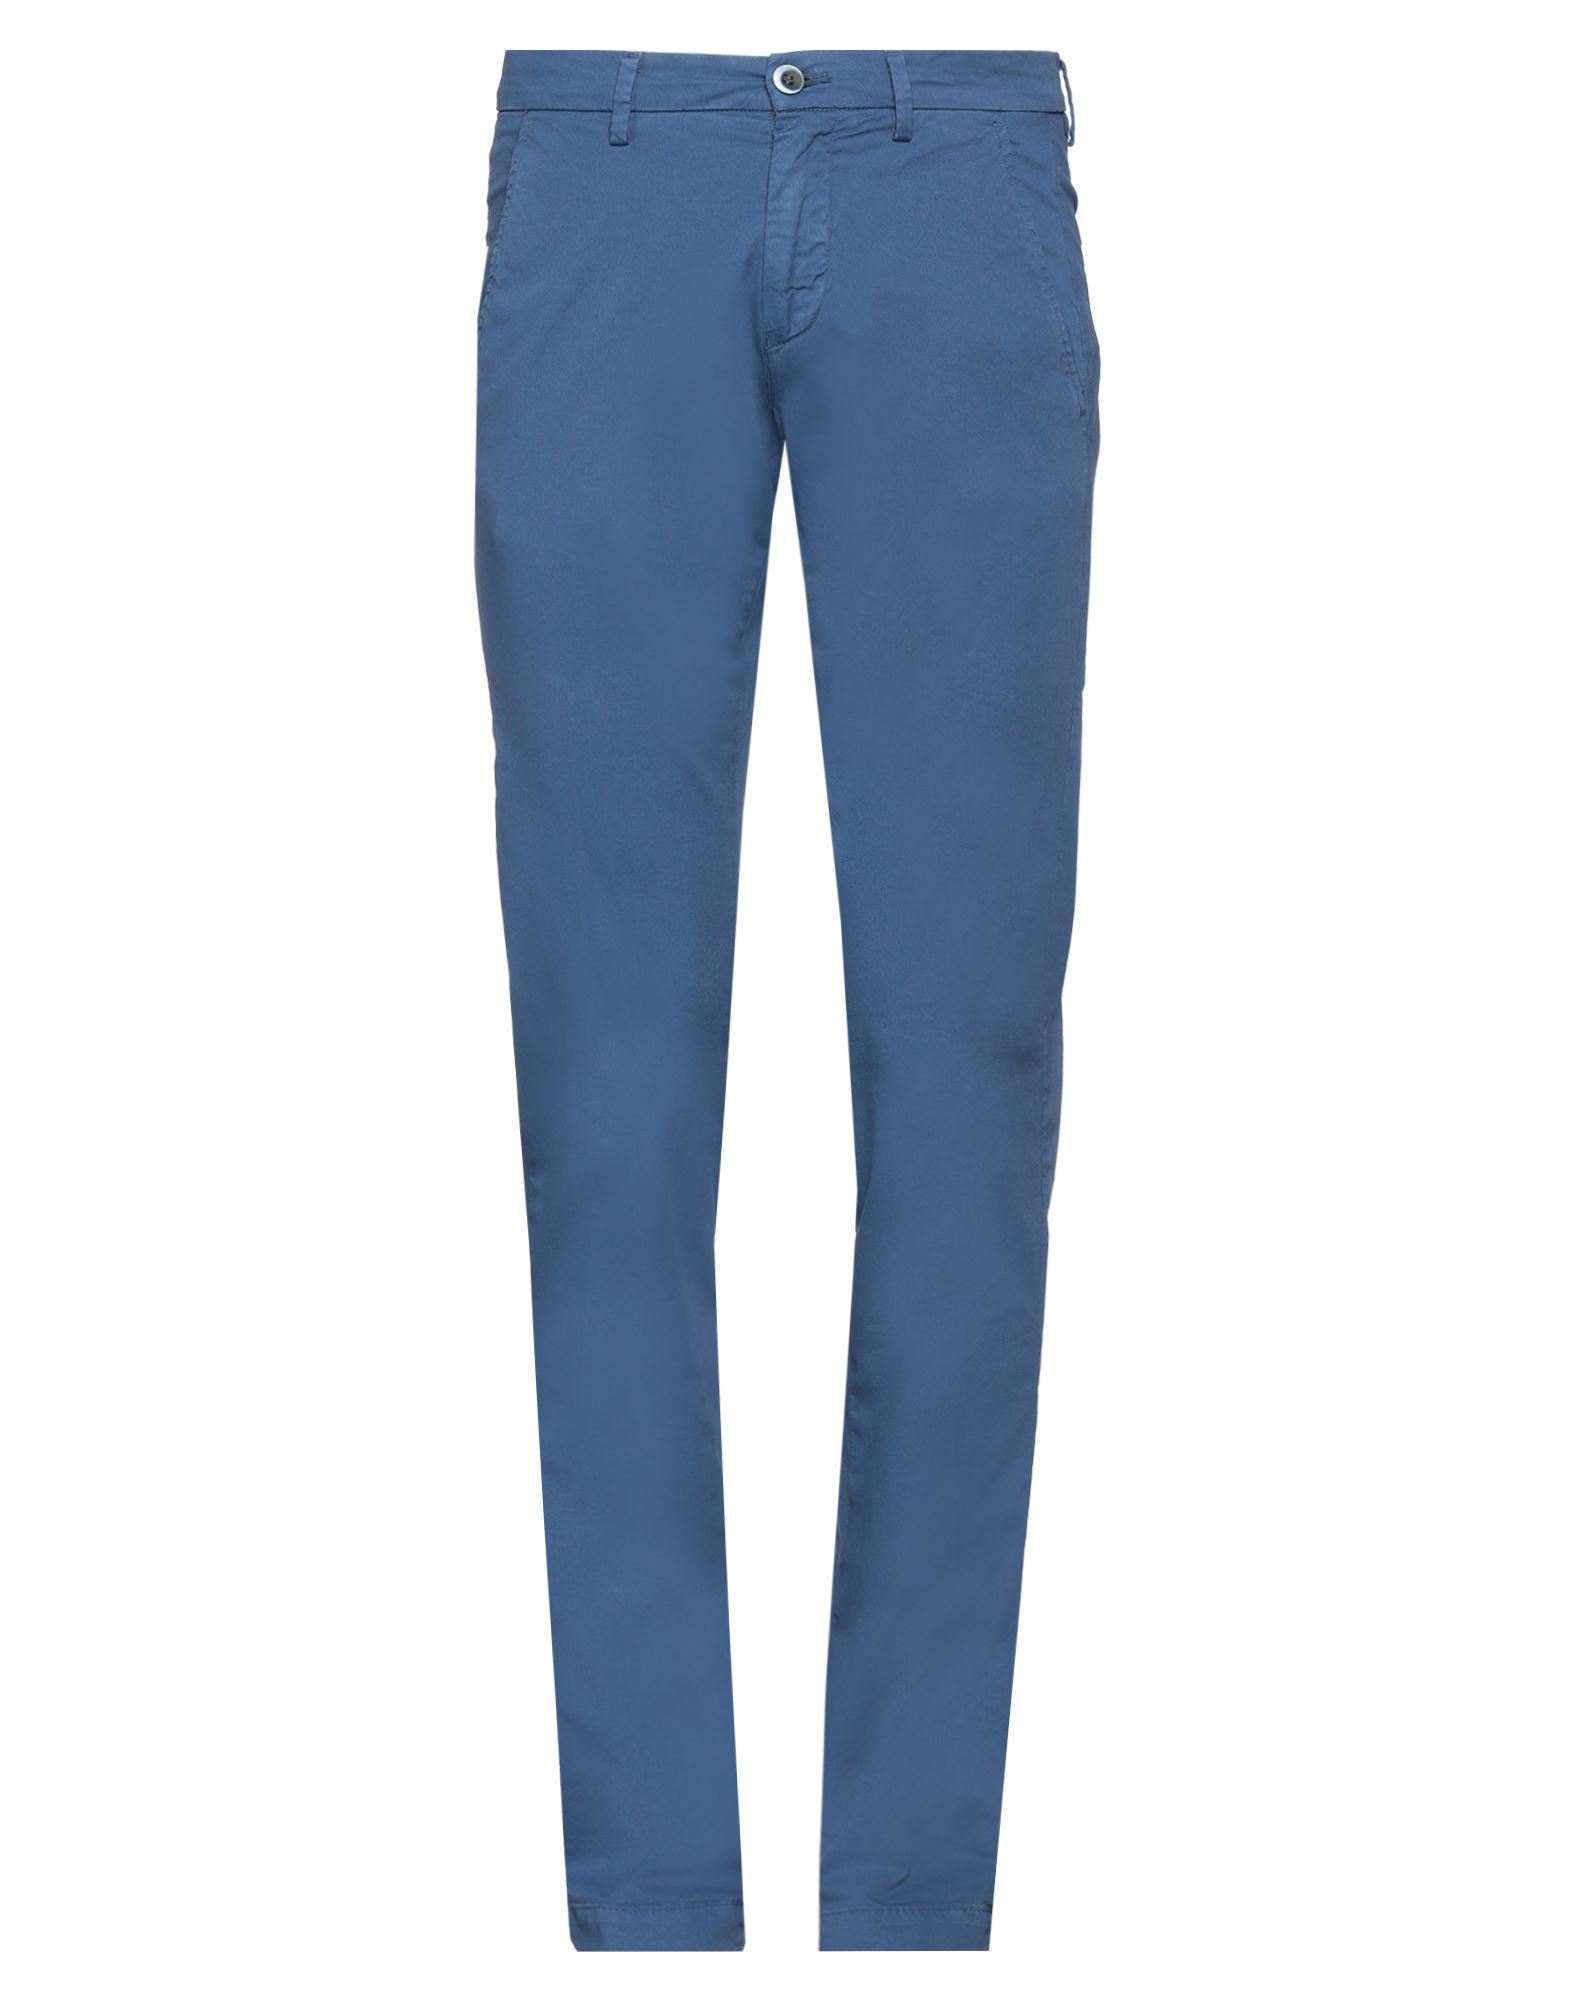 Mason's Man Pants Navy Blue Size 40 Linen, Cotton, Elastane